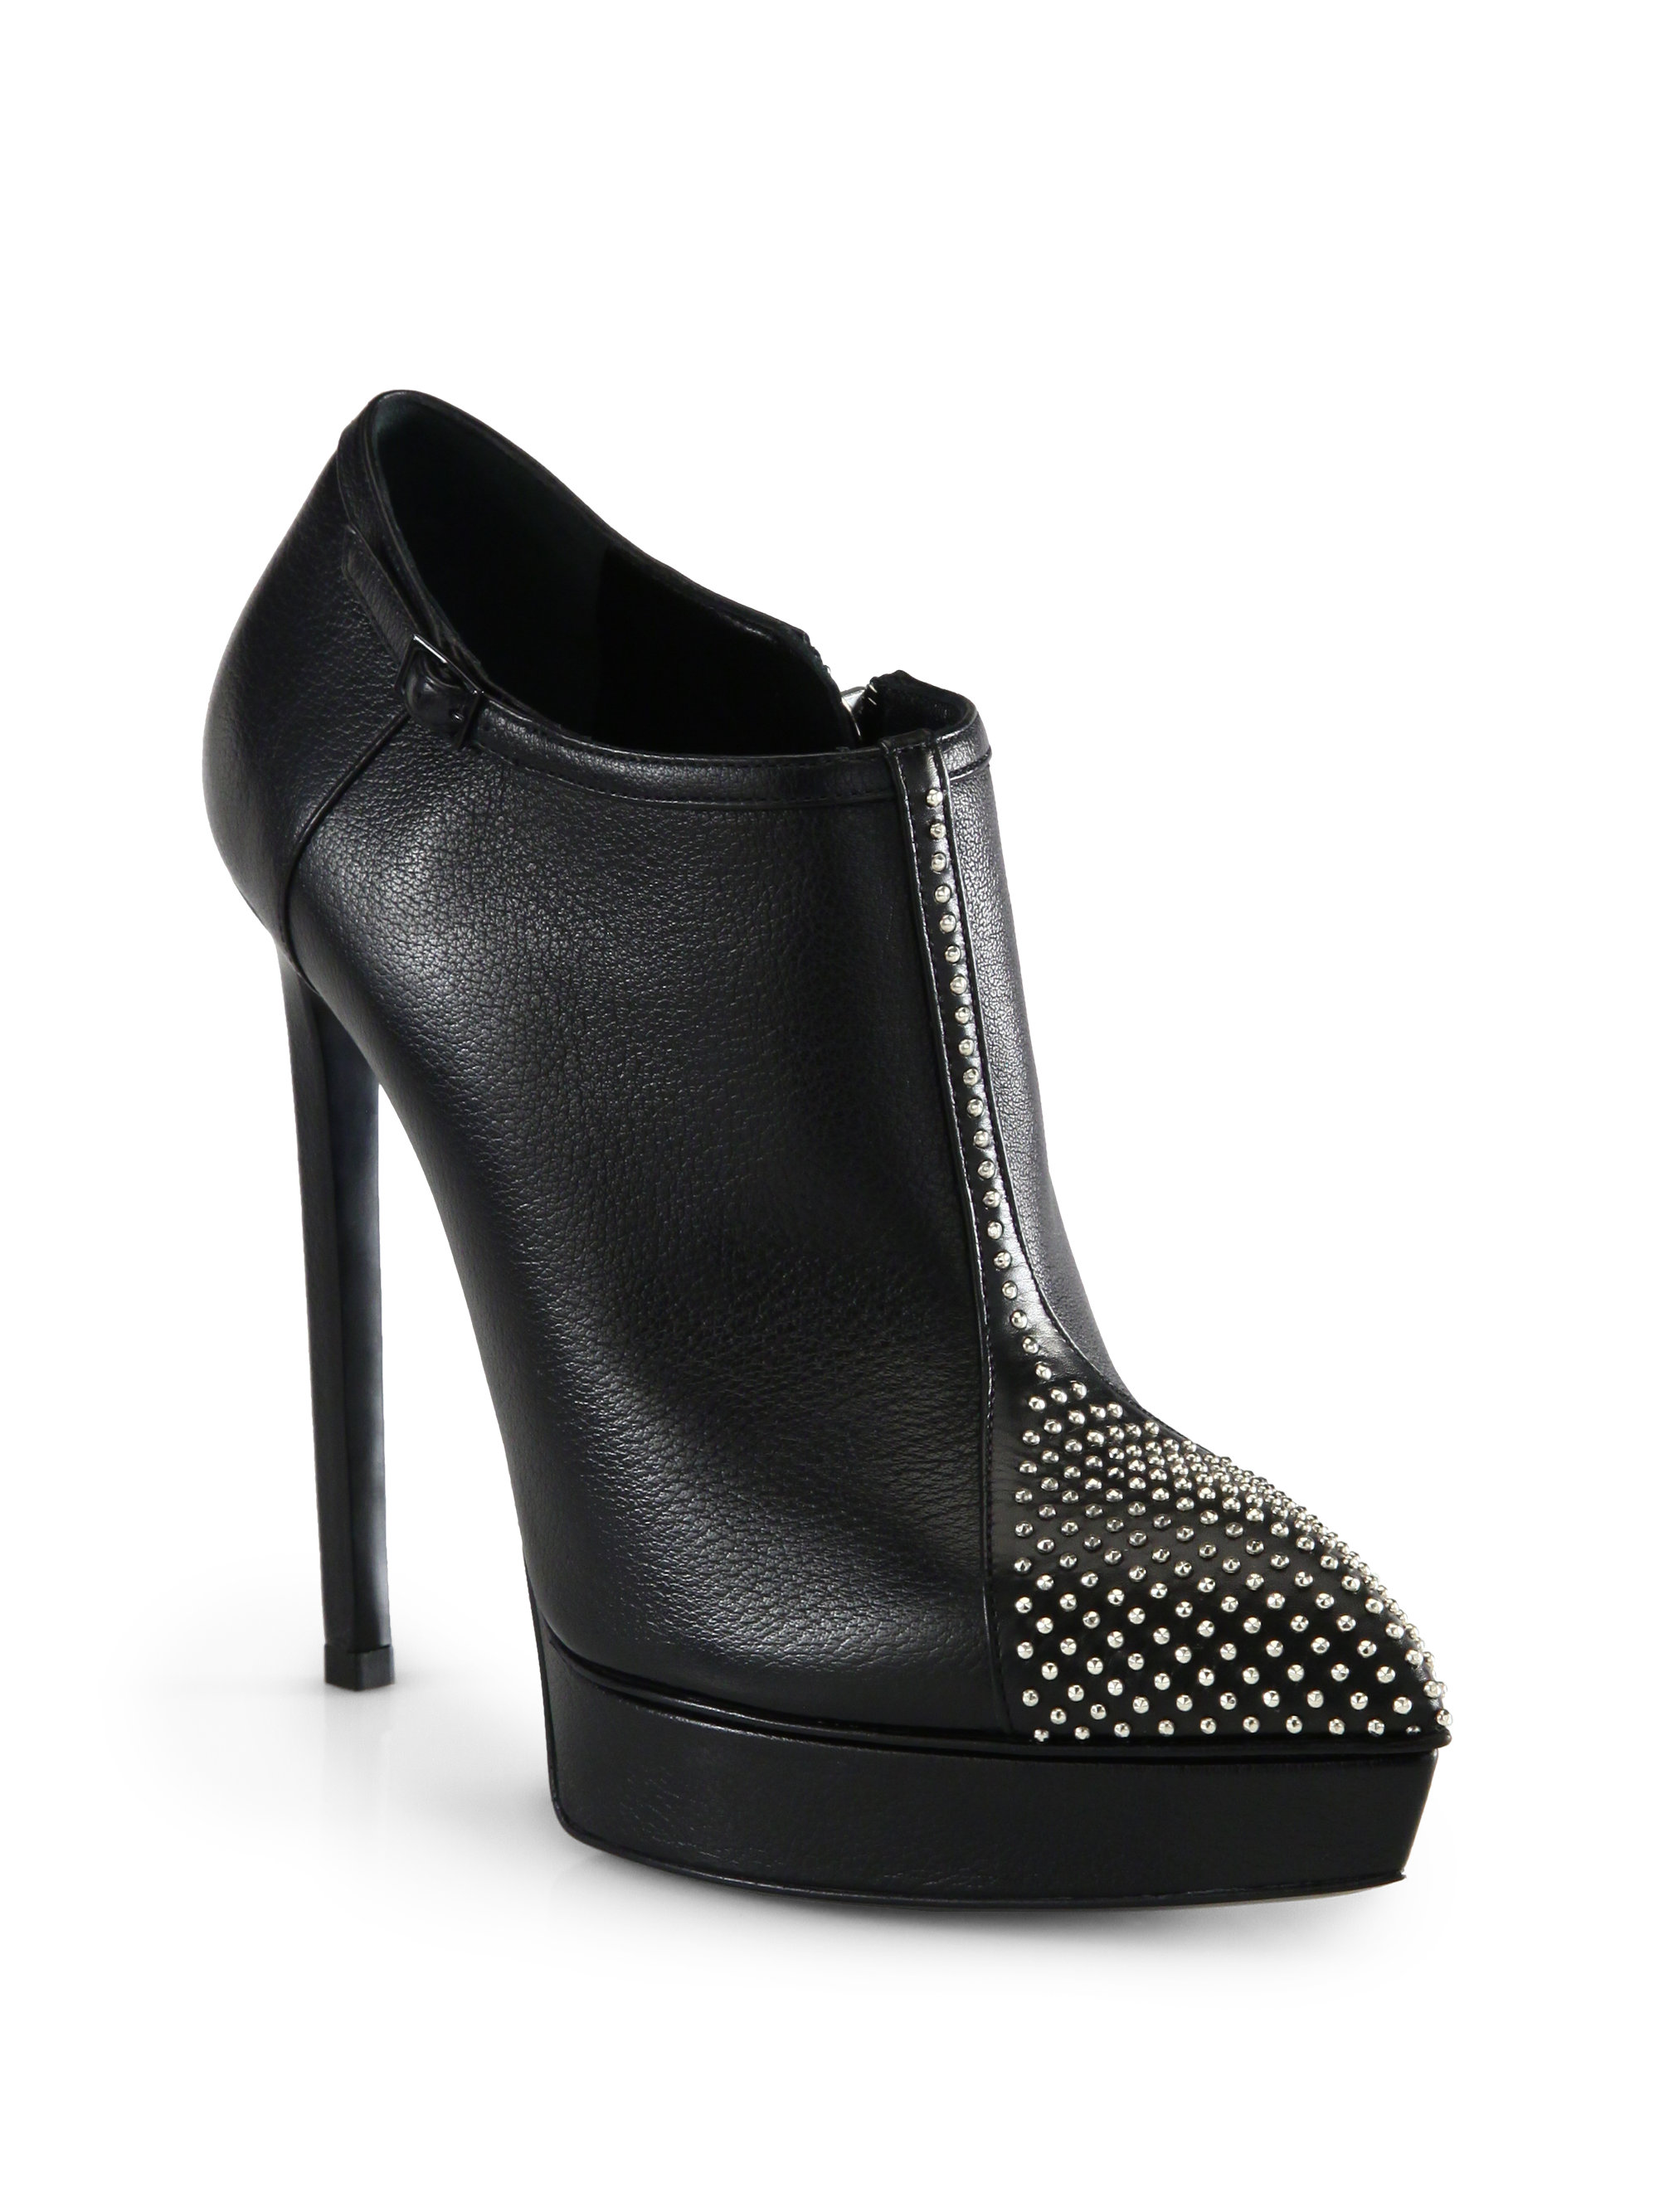 Saint Laurent Janis Studded Leather Platform Ankle Boots in Black | Lyst